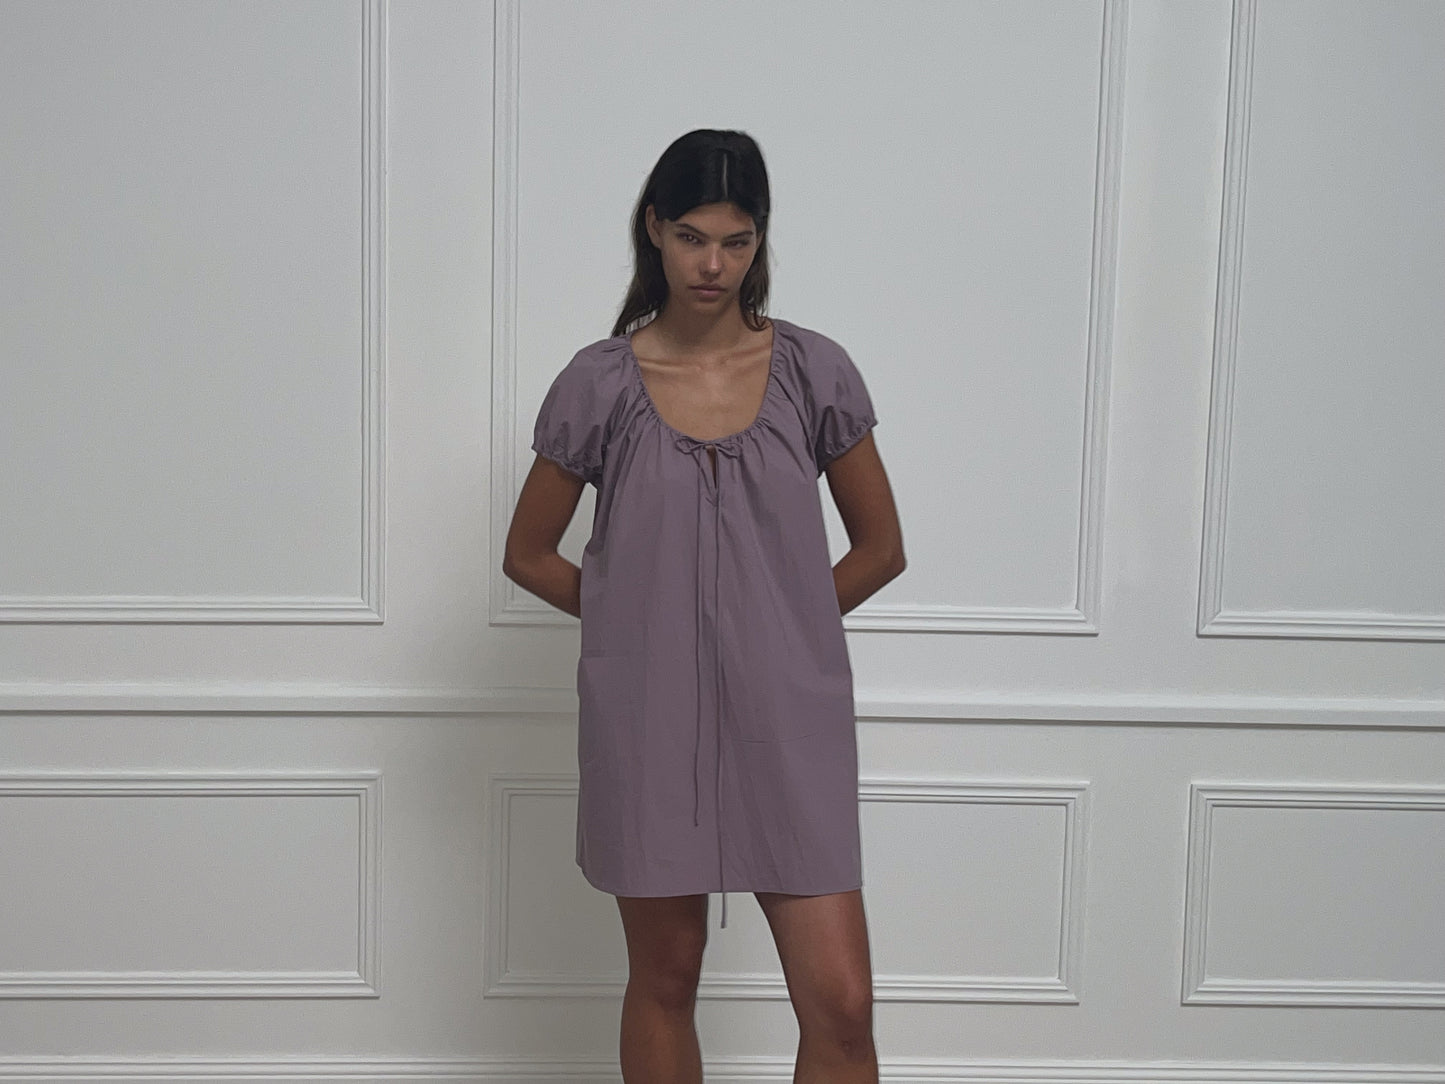 Female model wearing Capped Sleeve Dress - Mauve by Deiji Studios against plain background